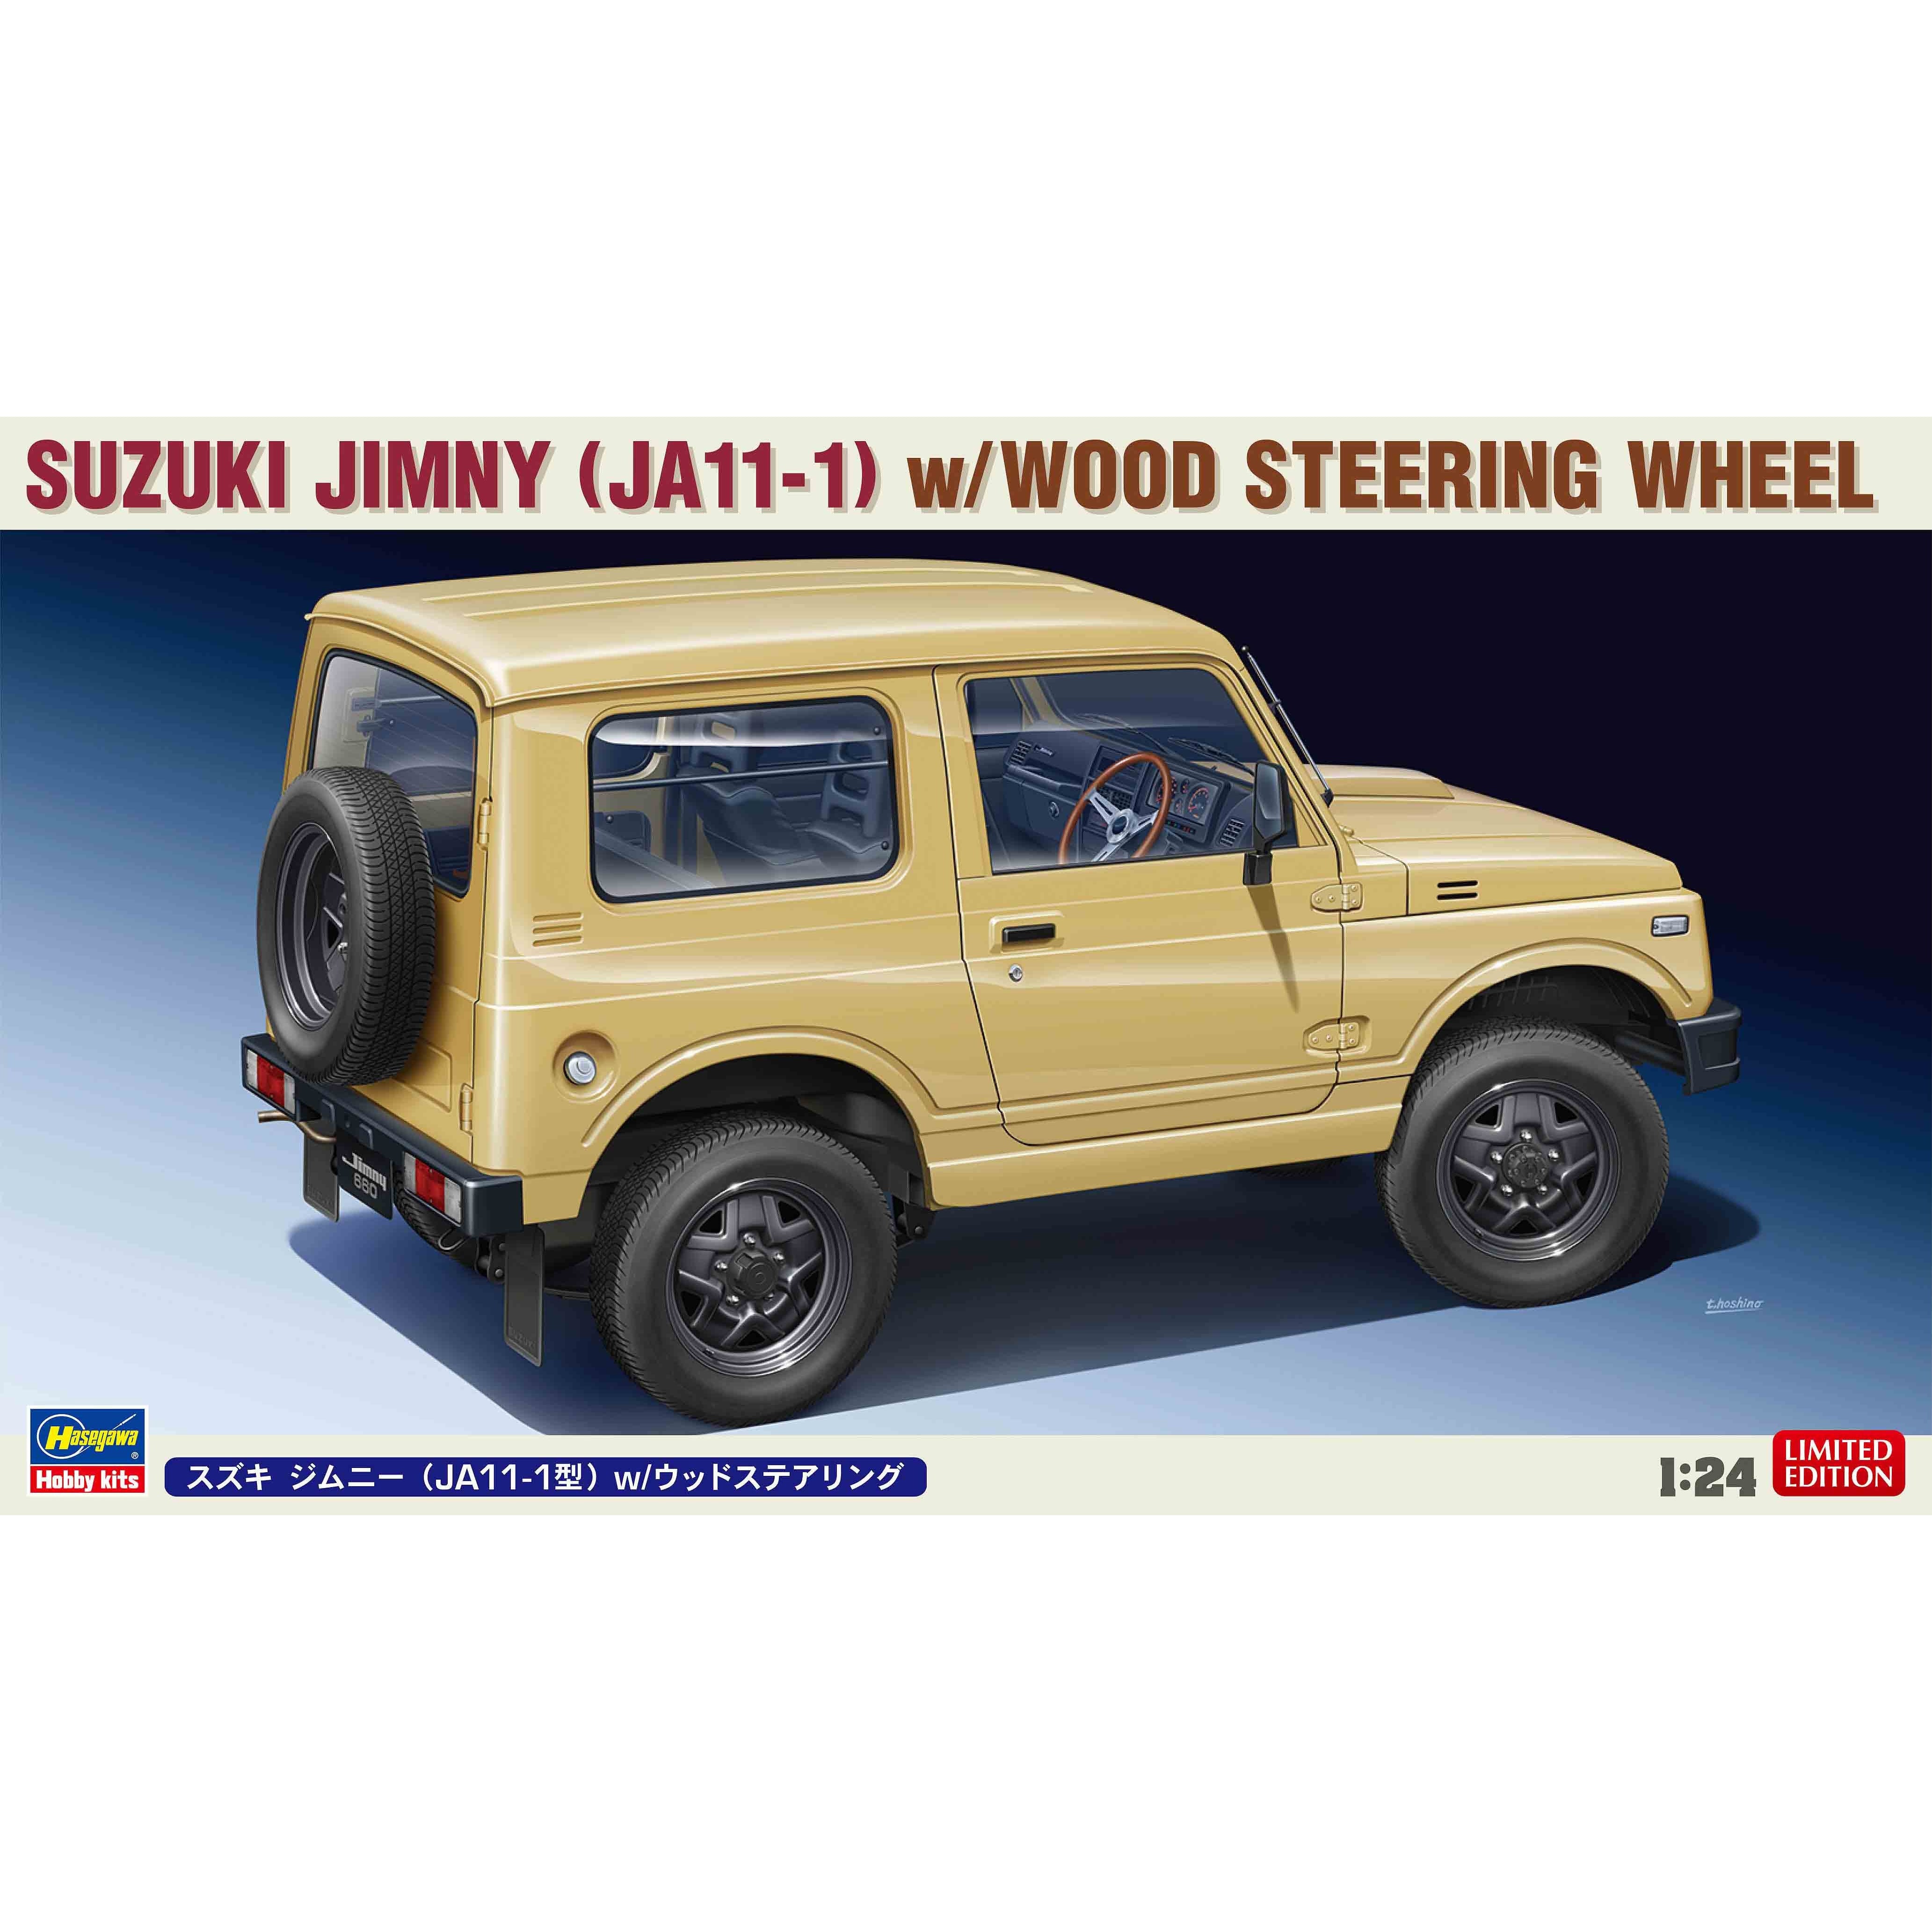 Suzuki Jimny (JA11-1) w/Wood Steering Wheel 1/24 #20568 by Hasegawa